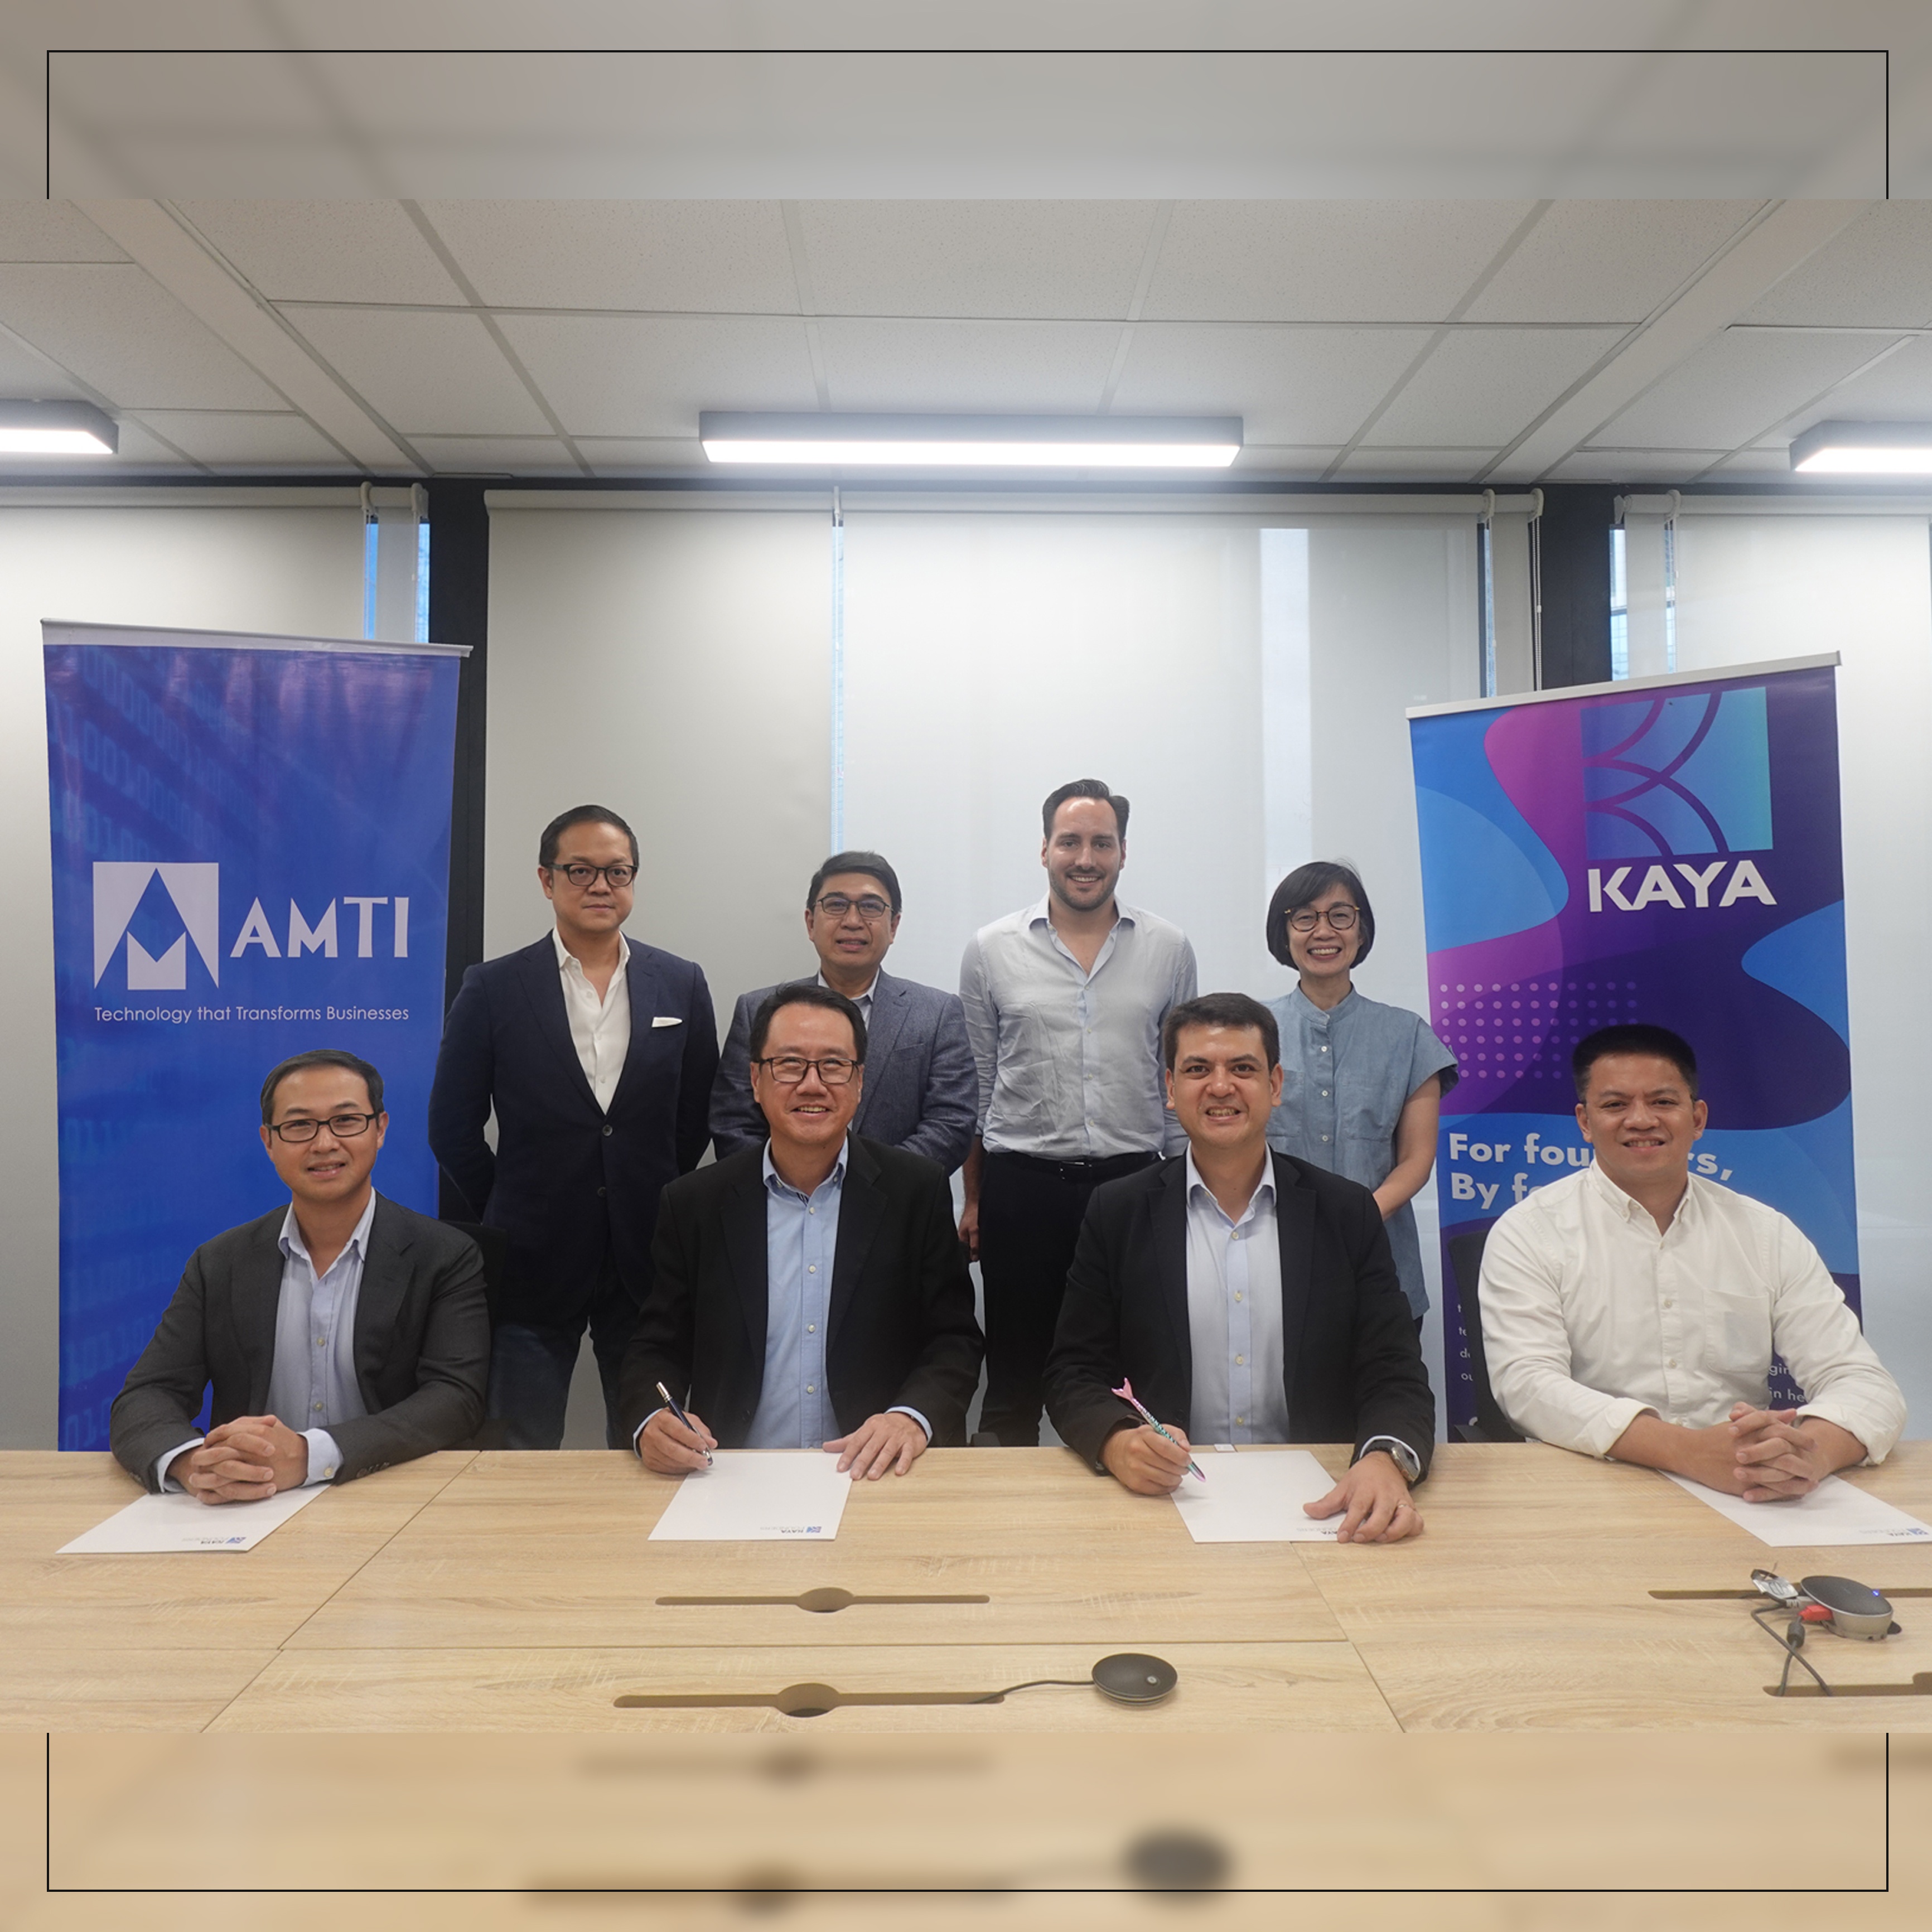 Empowering Visionary TechPreneurs: AMTI and Kaya Founders Partnership to support Philippine Startups